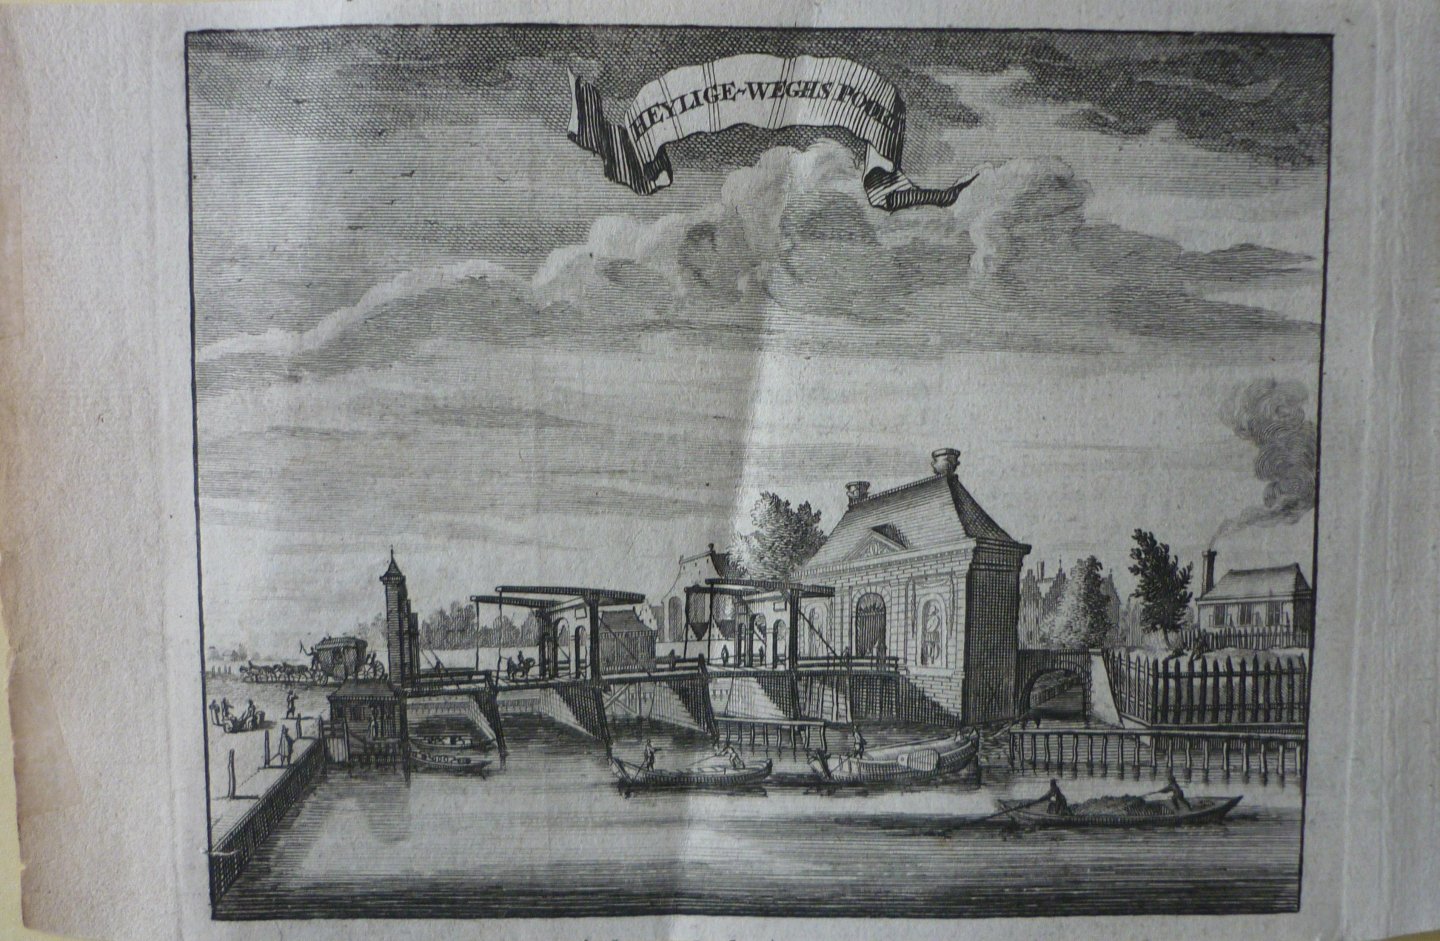 Commelin, Casparus - Heylige-Weghs Poort. Originele kopergravure.